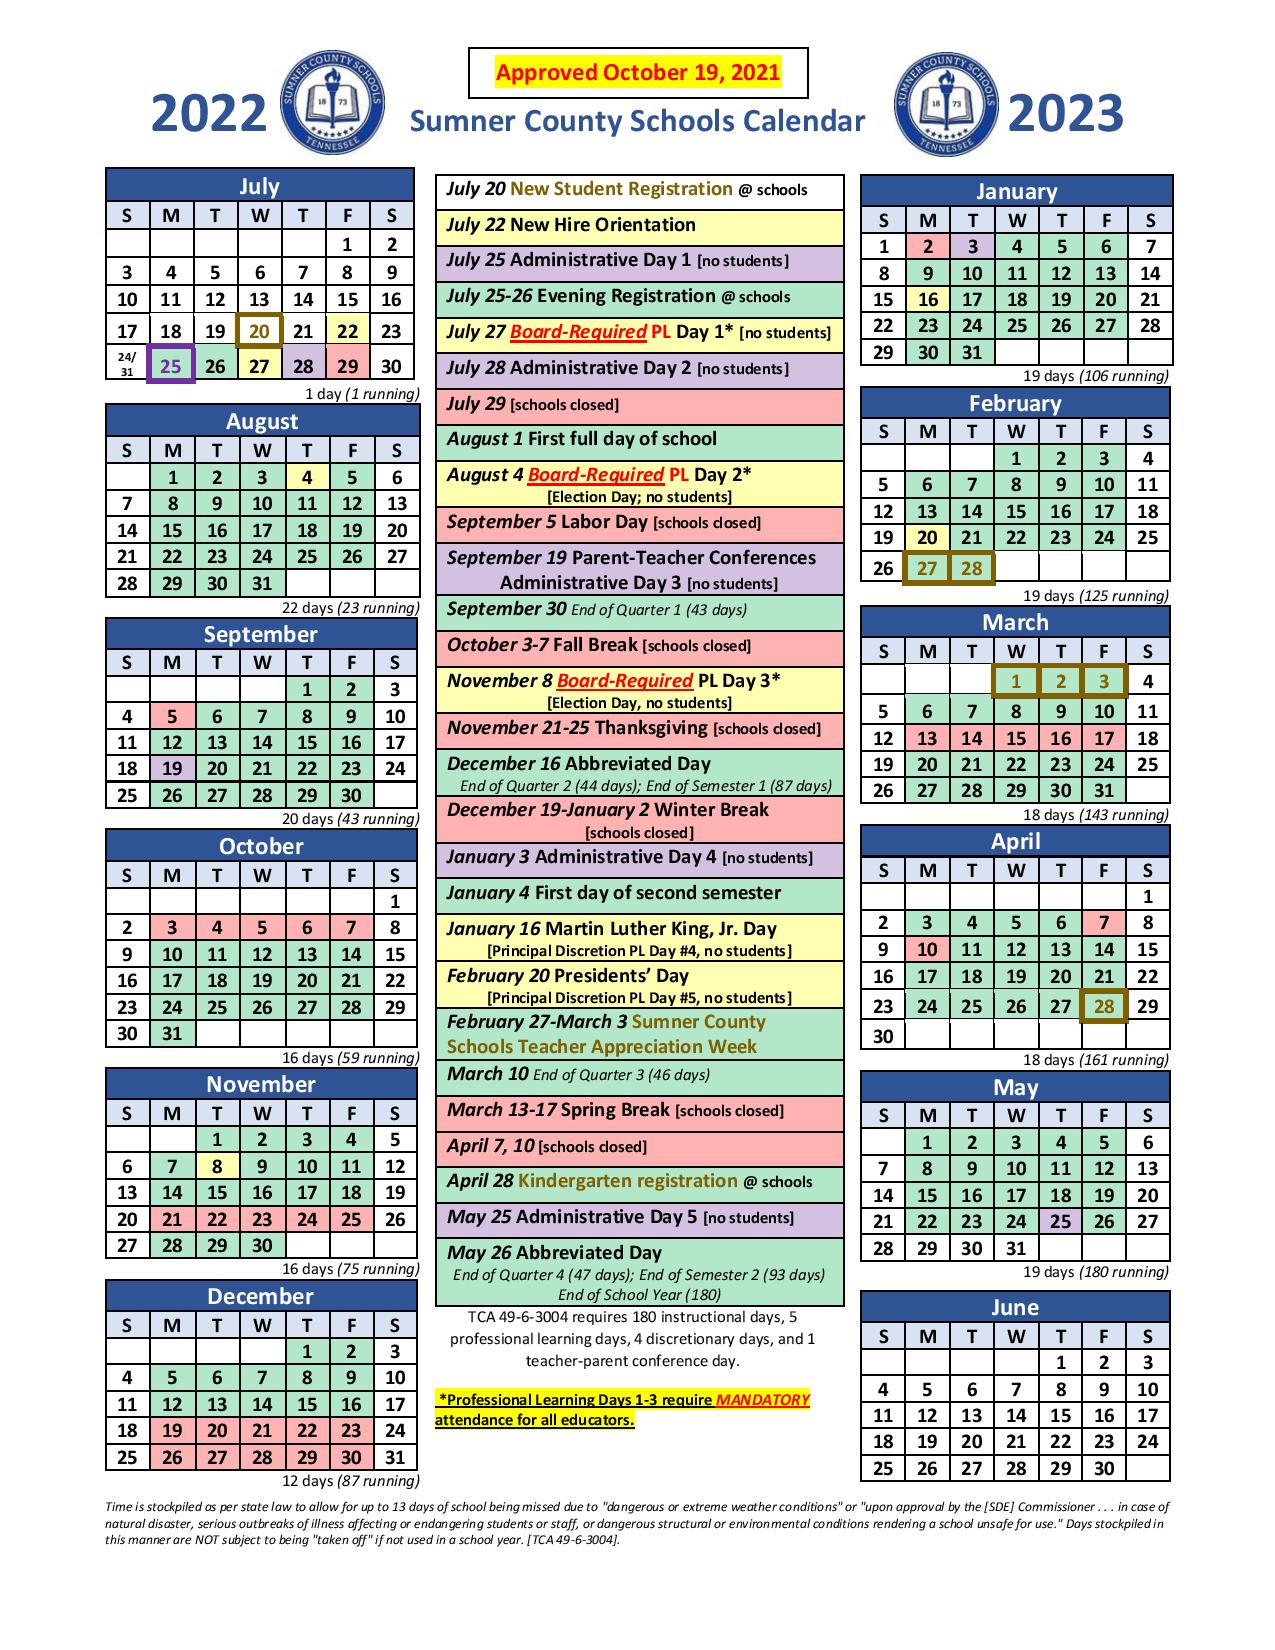 Sumner County School Calendar Holidays 20222023